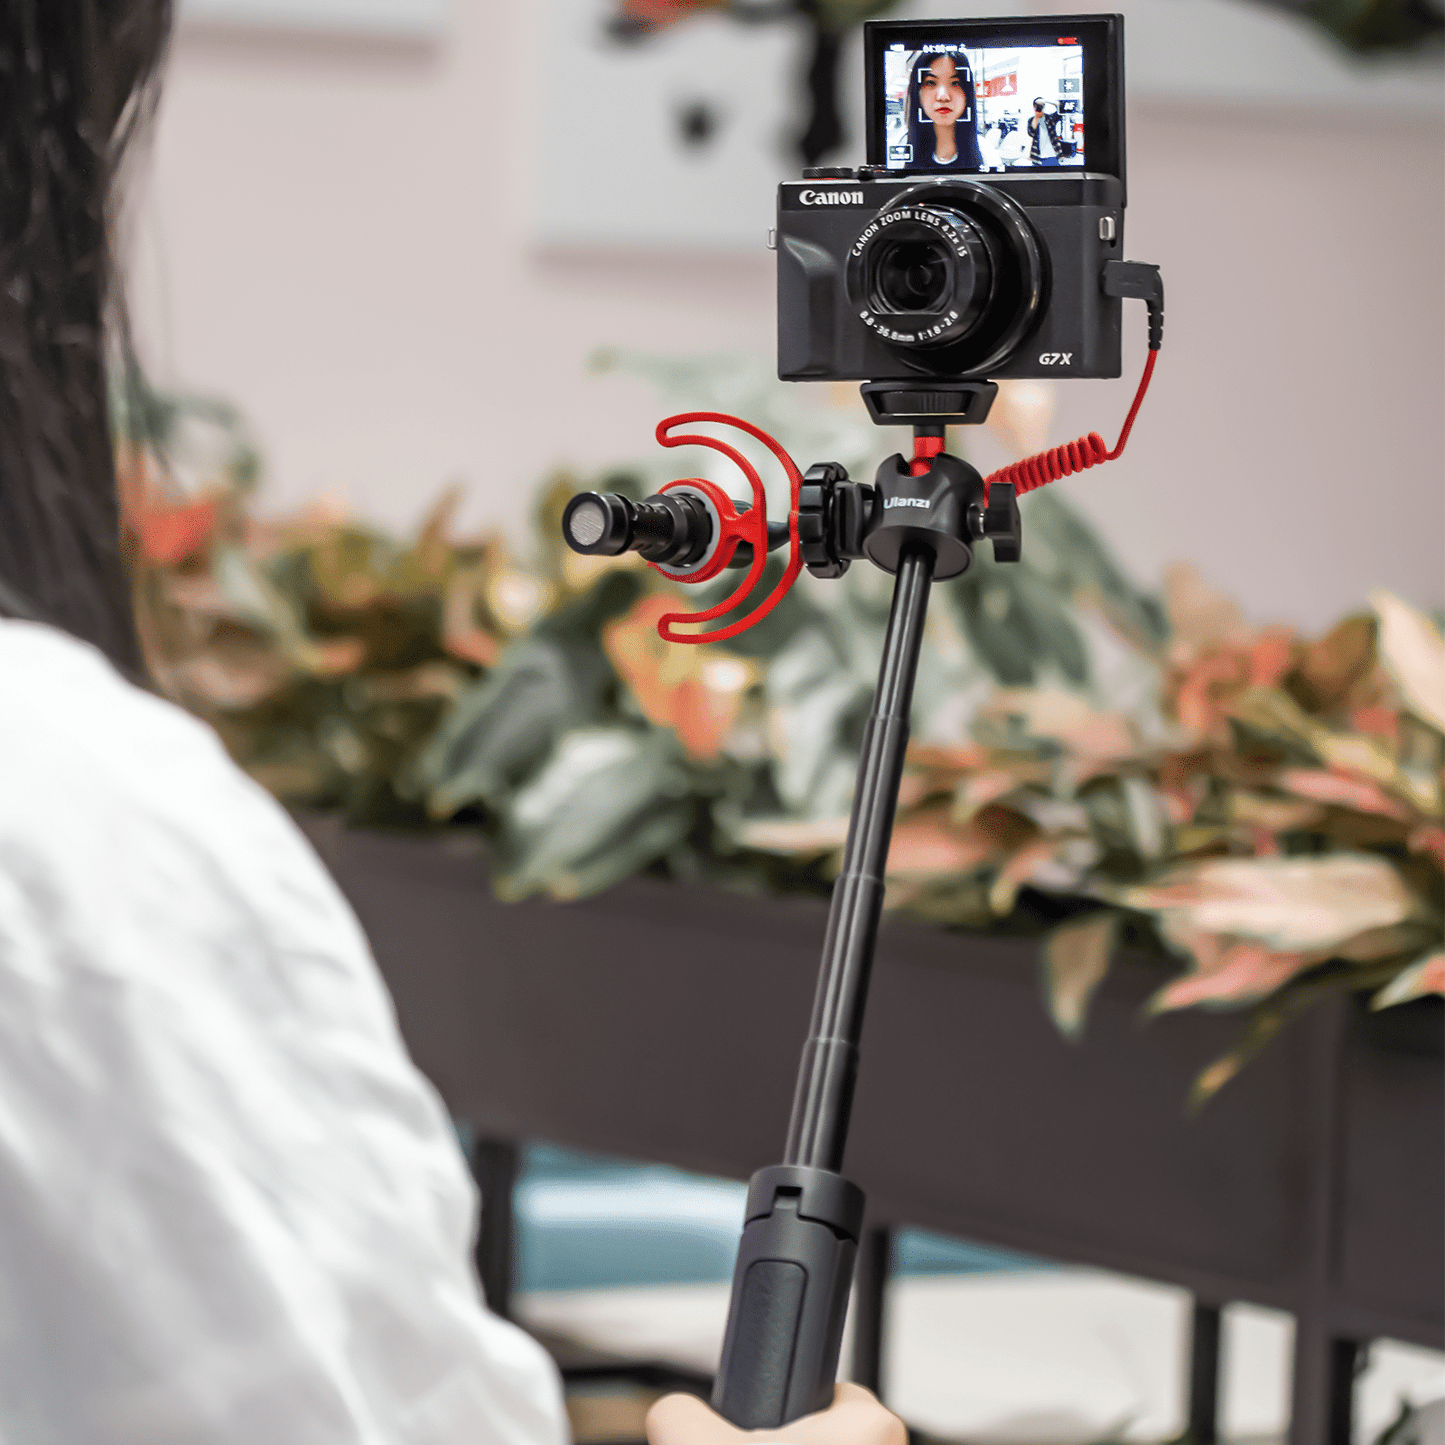 Ulanzi MT-16 Vlogging Tripod, Camera Holder & Selfie stick with cold shoe mount